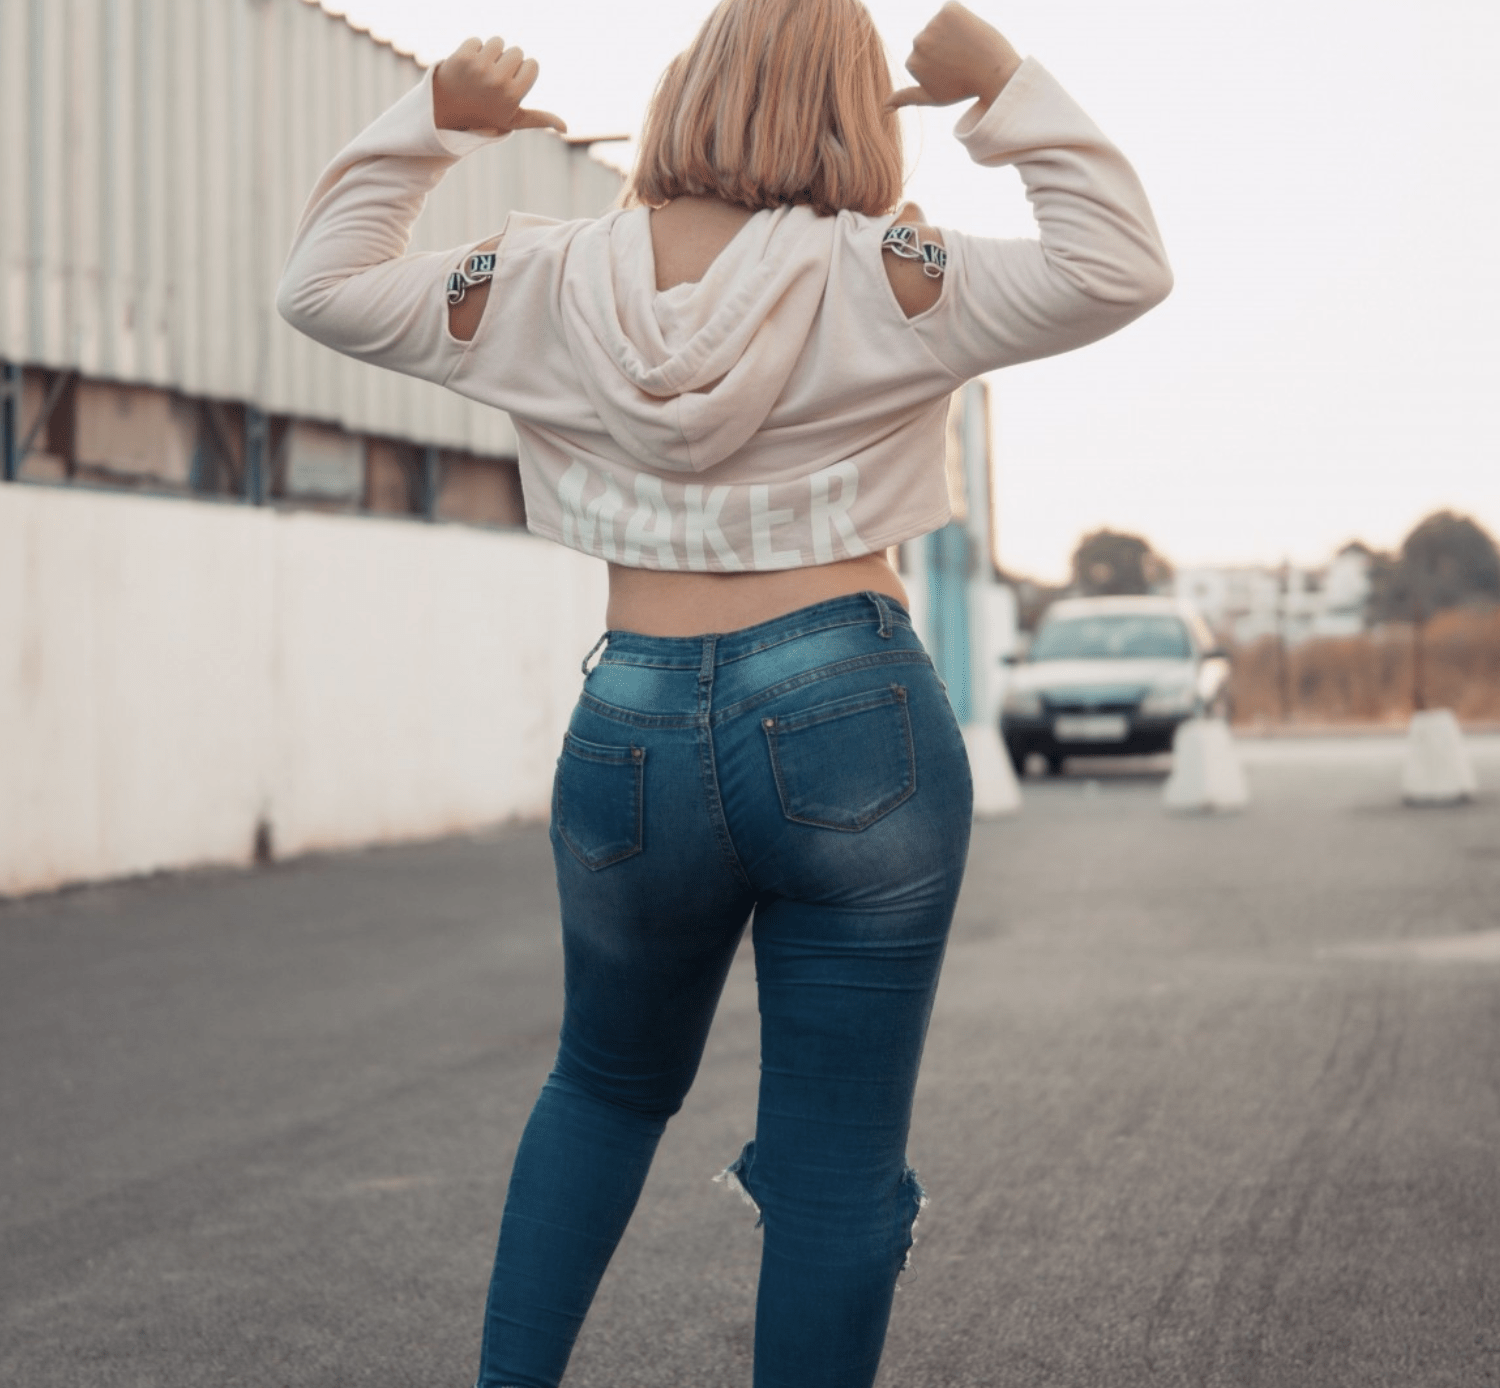 jeans blue photograph clothing denim standing girl